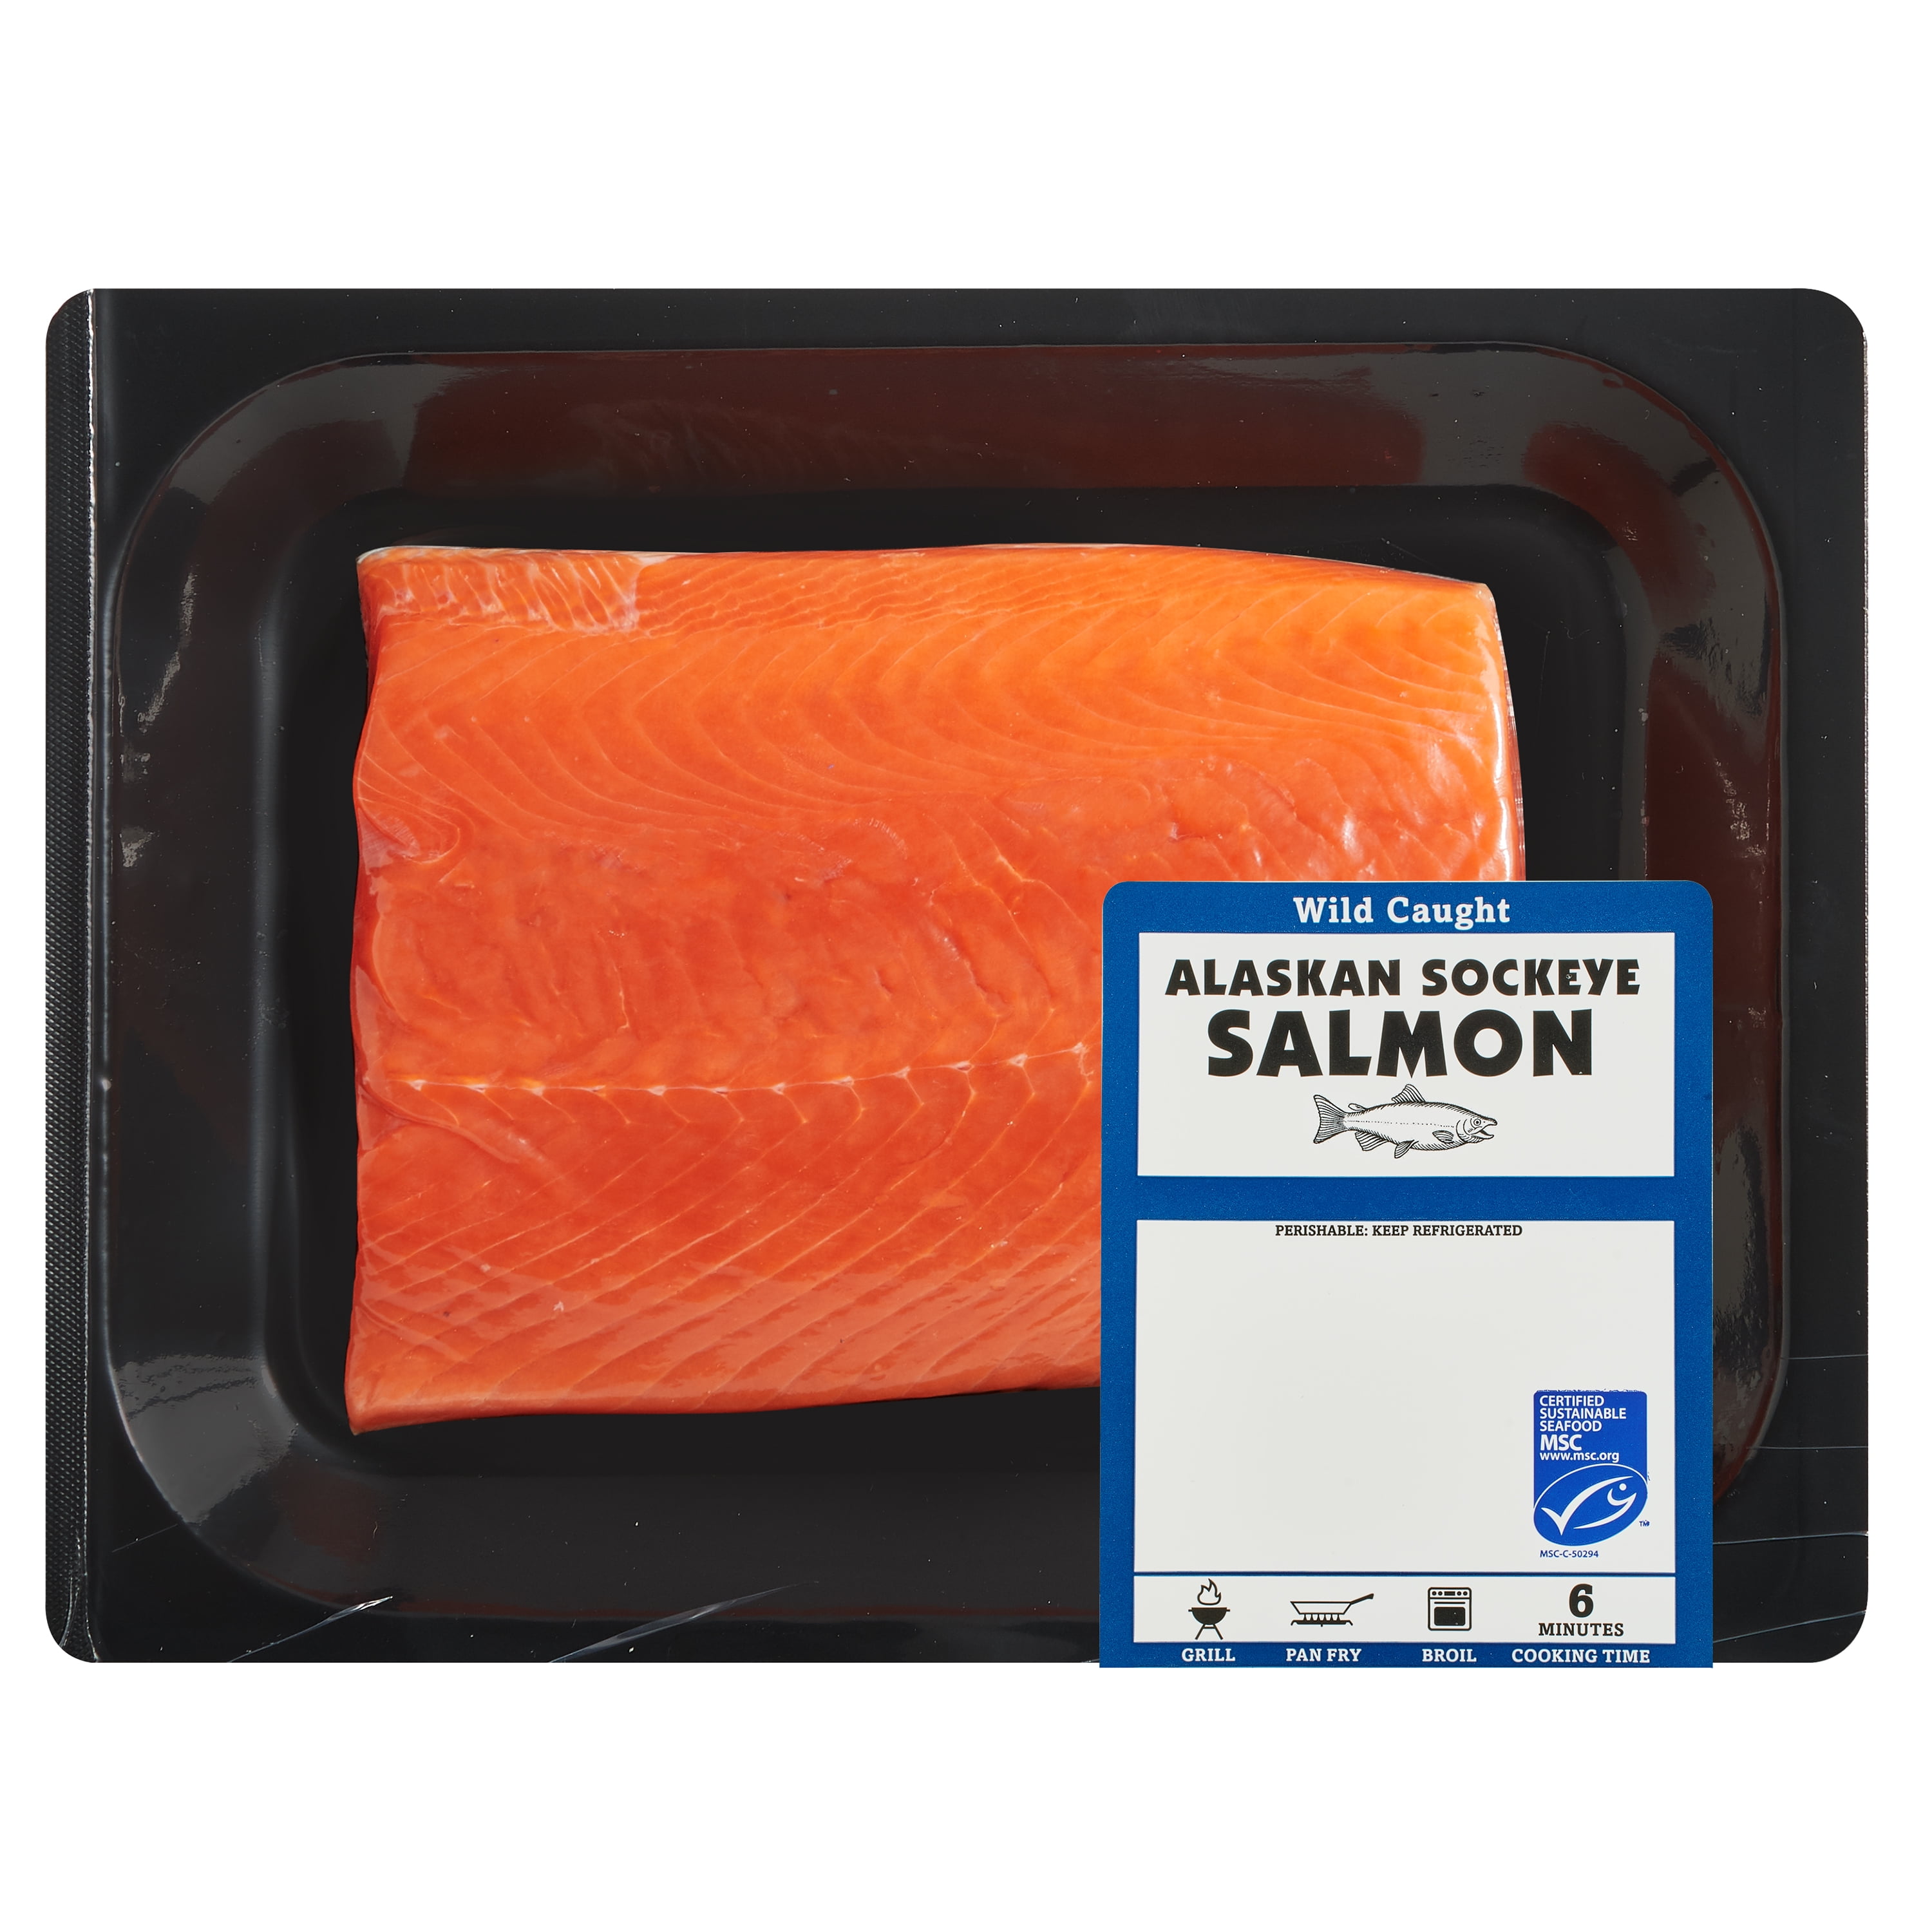 Wild Caught Alaska Sockeye Salmon Portions, 0.7 - 0.85 lb